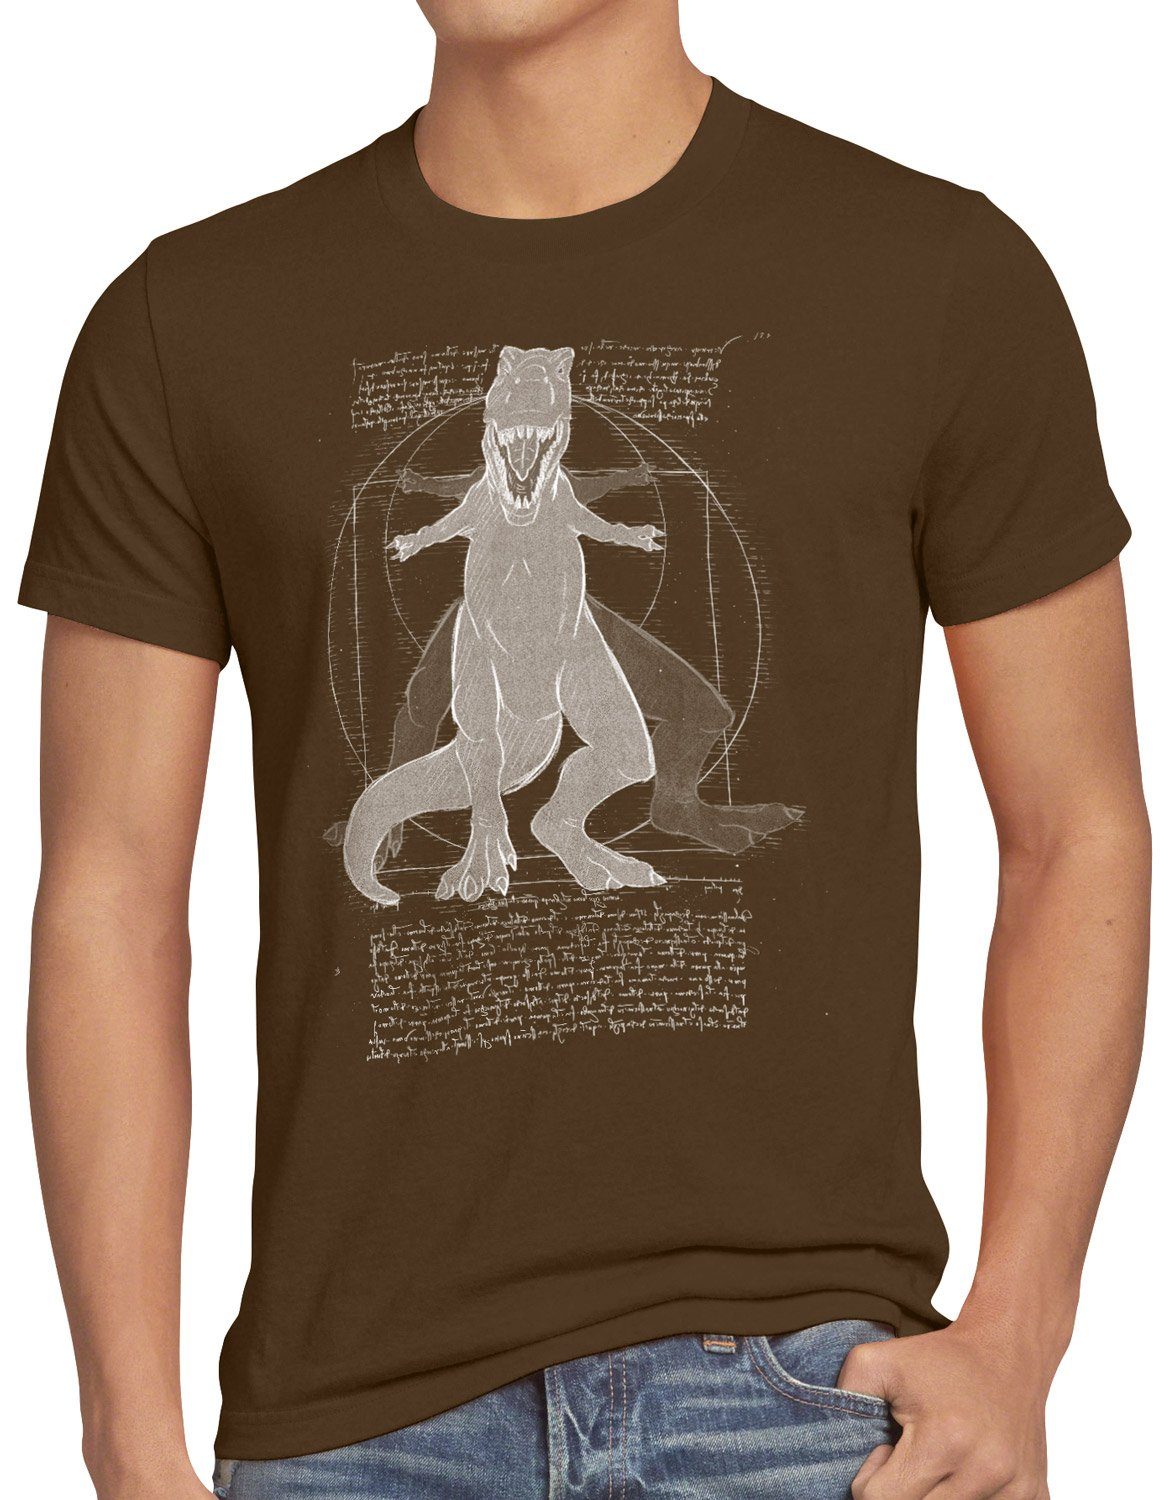 Vitruvianischer style3 T-Rex T-Shirt dinosaurier Print-Shirt braun Herren tyrannosaurus